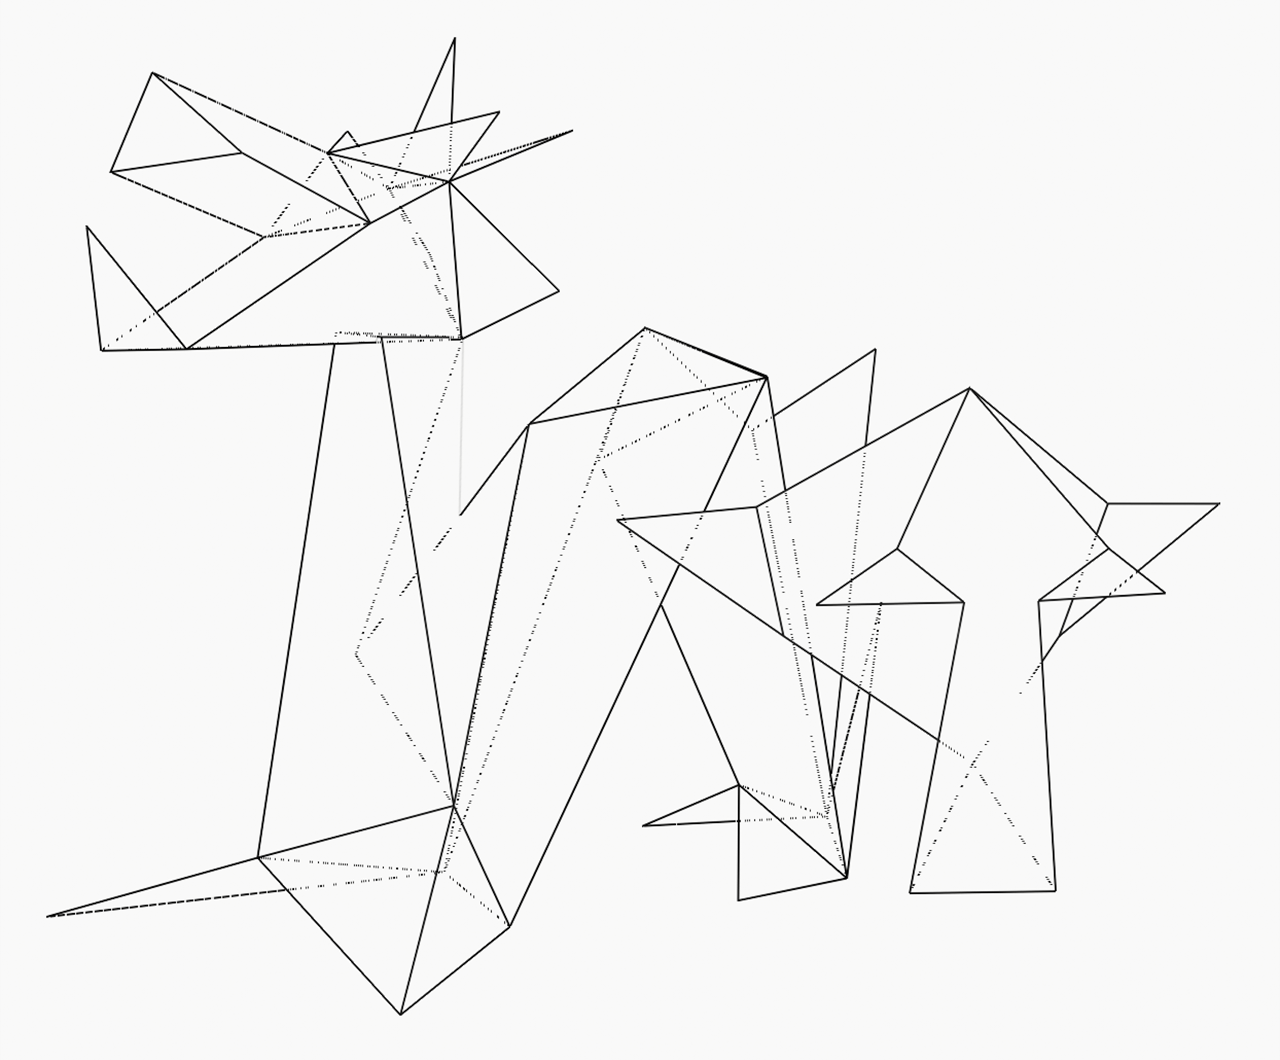 Geometry: 58 vertices, 100 edges, 43 faces